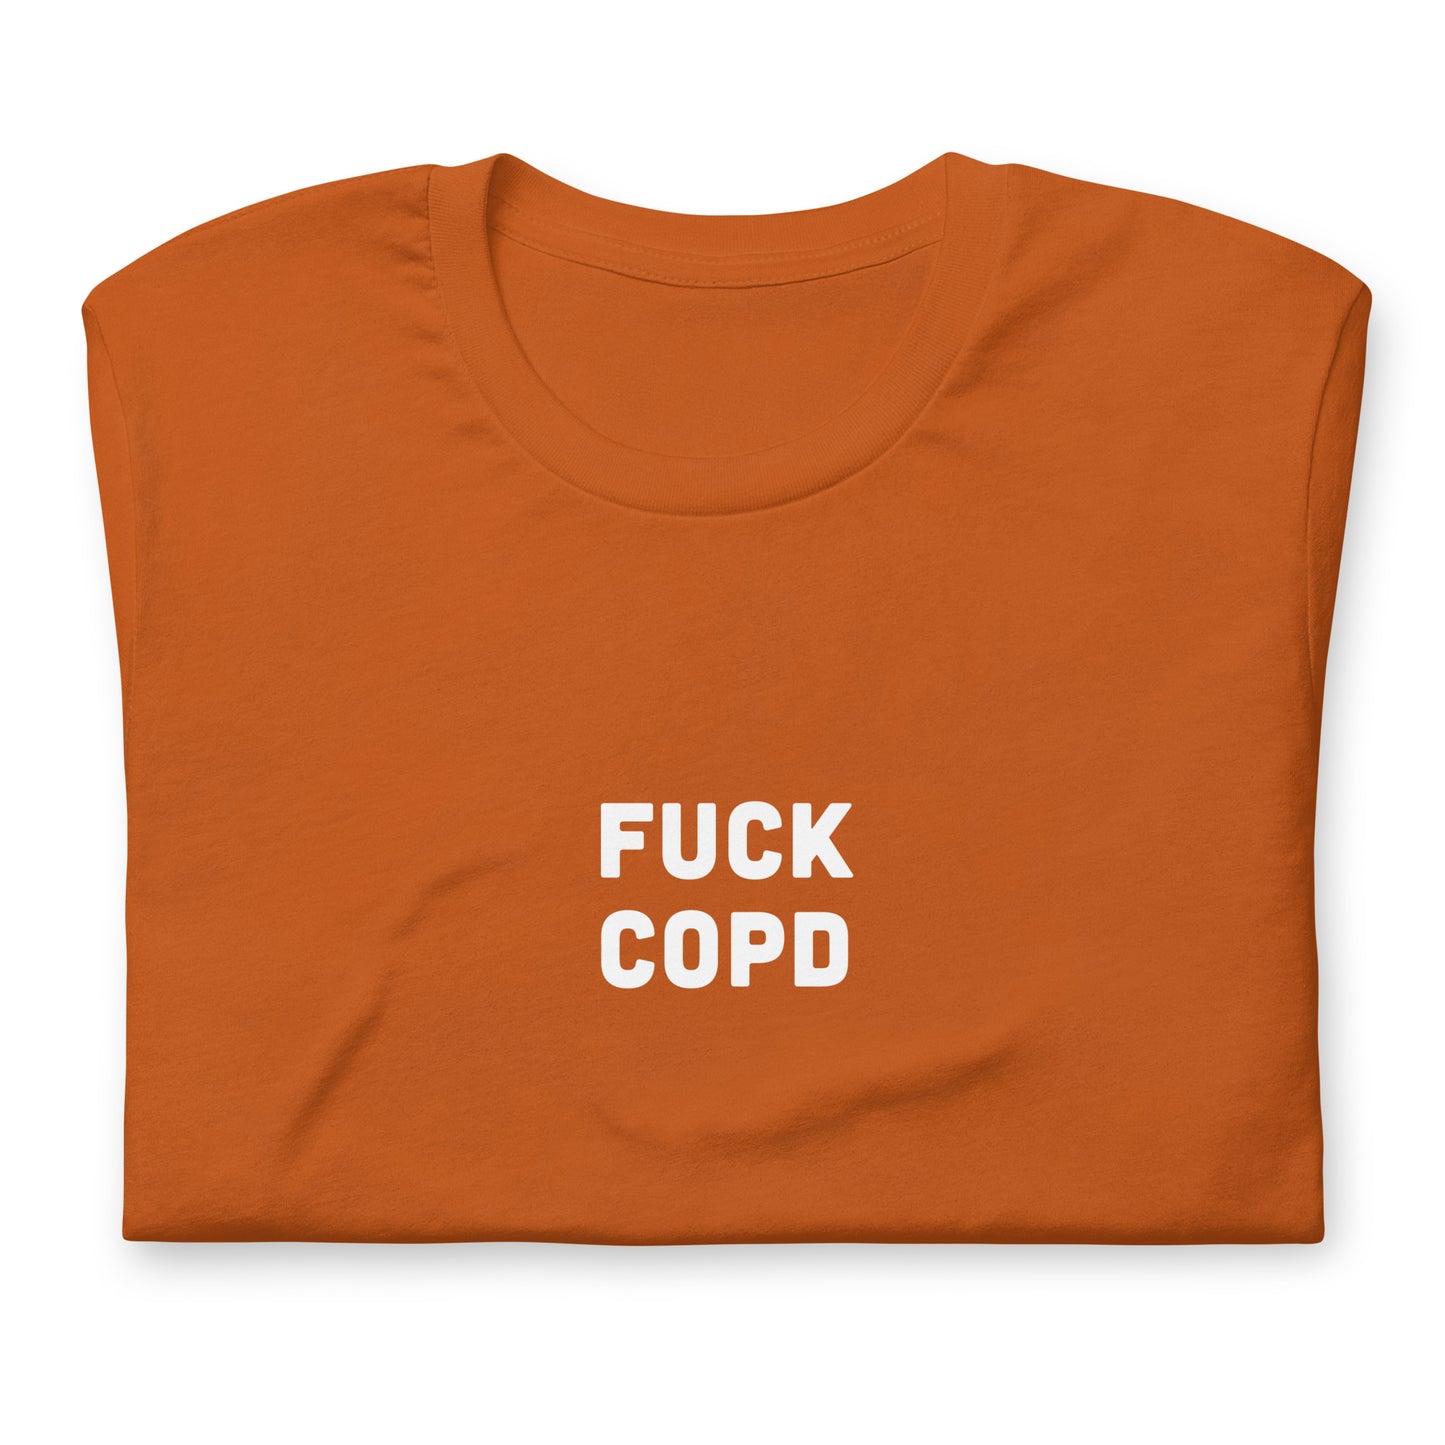 Fuck Copd T-Shirt Size S Color Navy